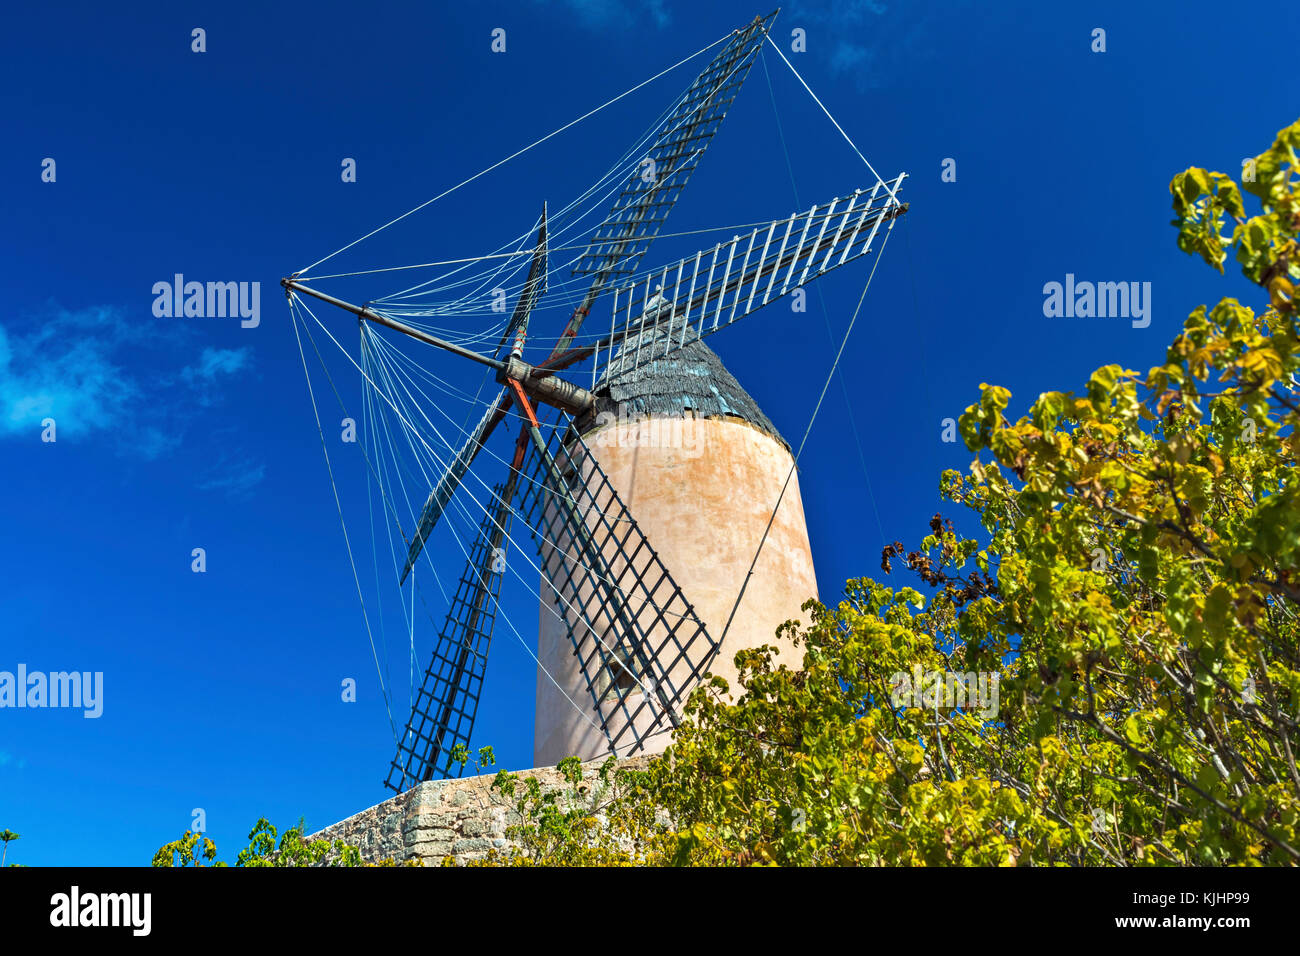 Traditional Mallorcan windmill at Galatzo, Mallorca, Balearic Isles, Spain Stock Photo